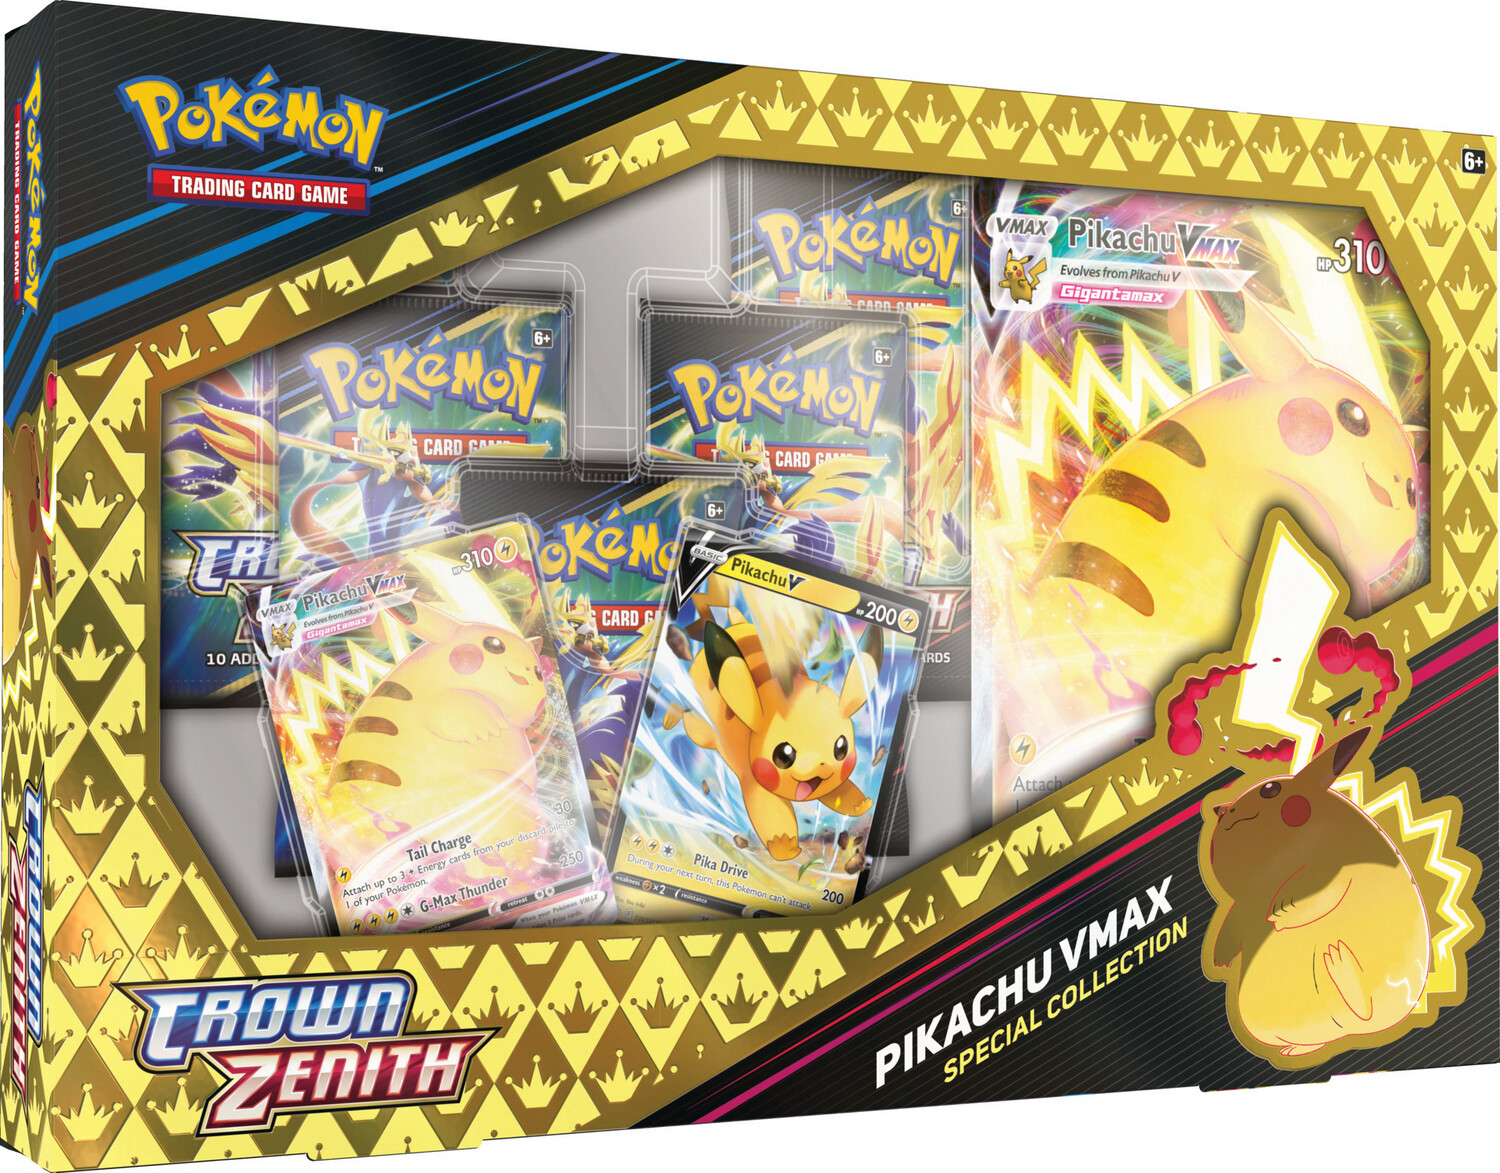 Pokémon TCG: Crown Zenith Special Collection – Pikachu VMAX